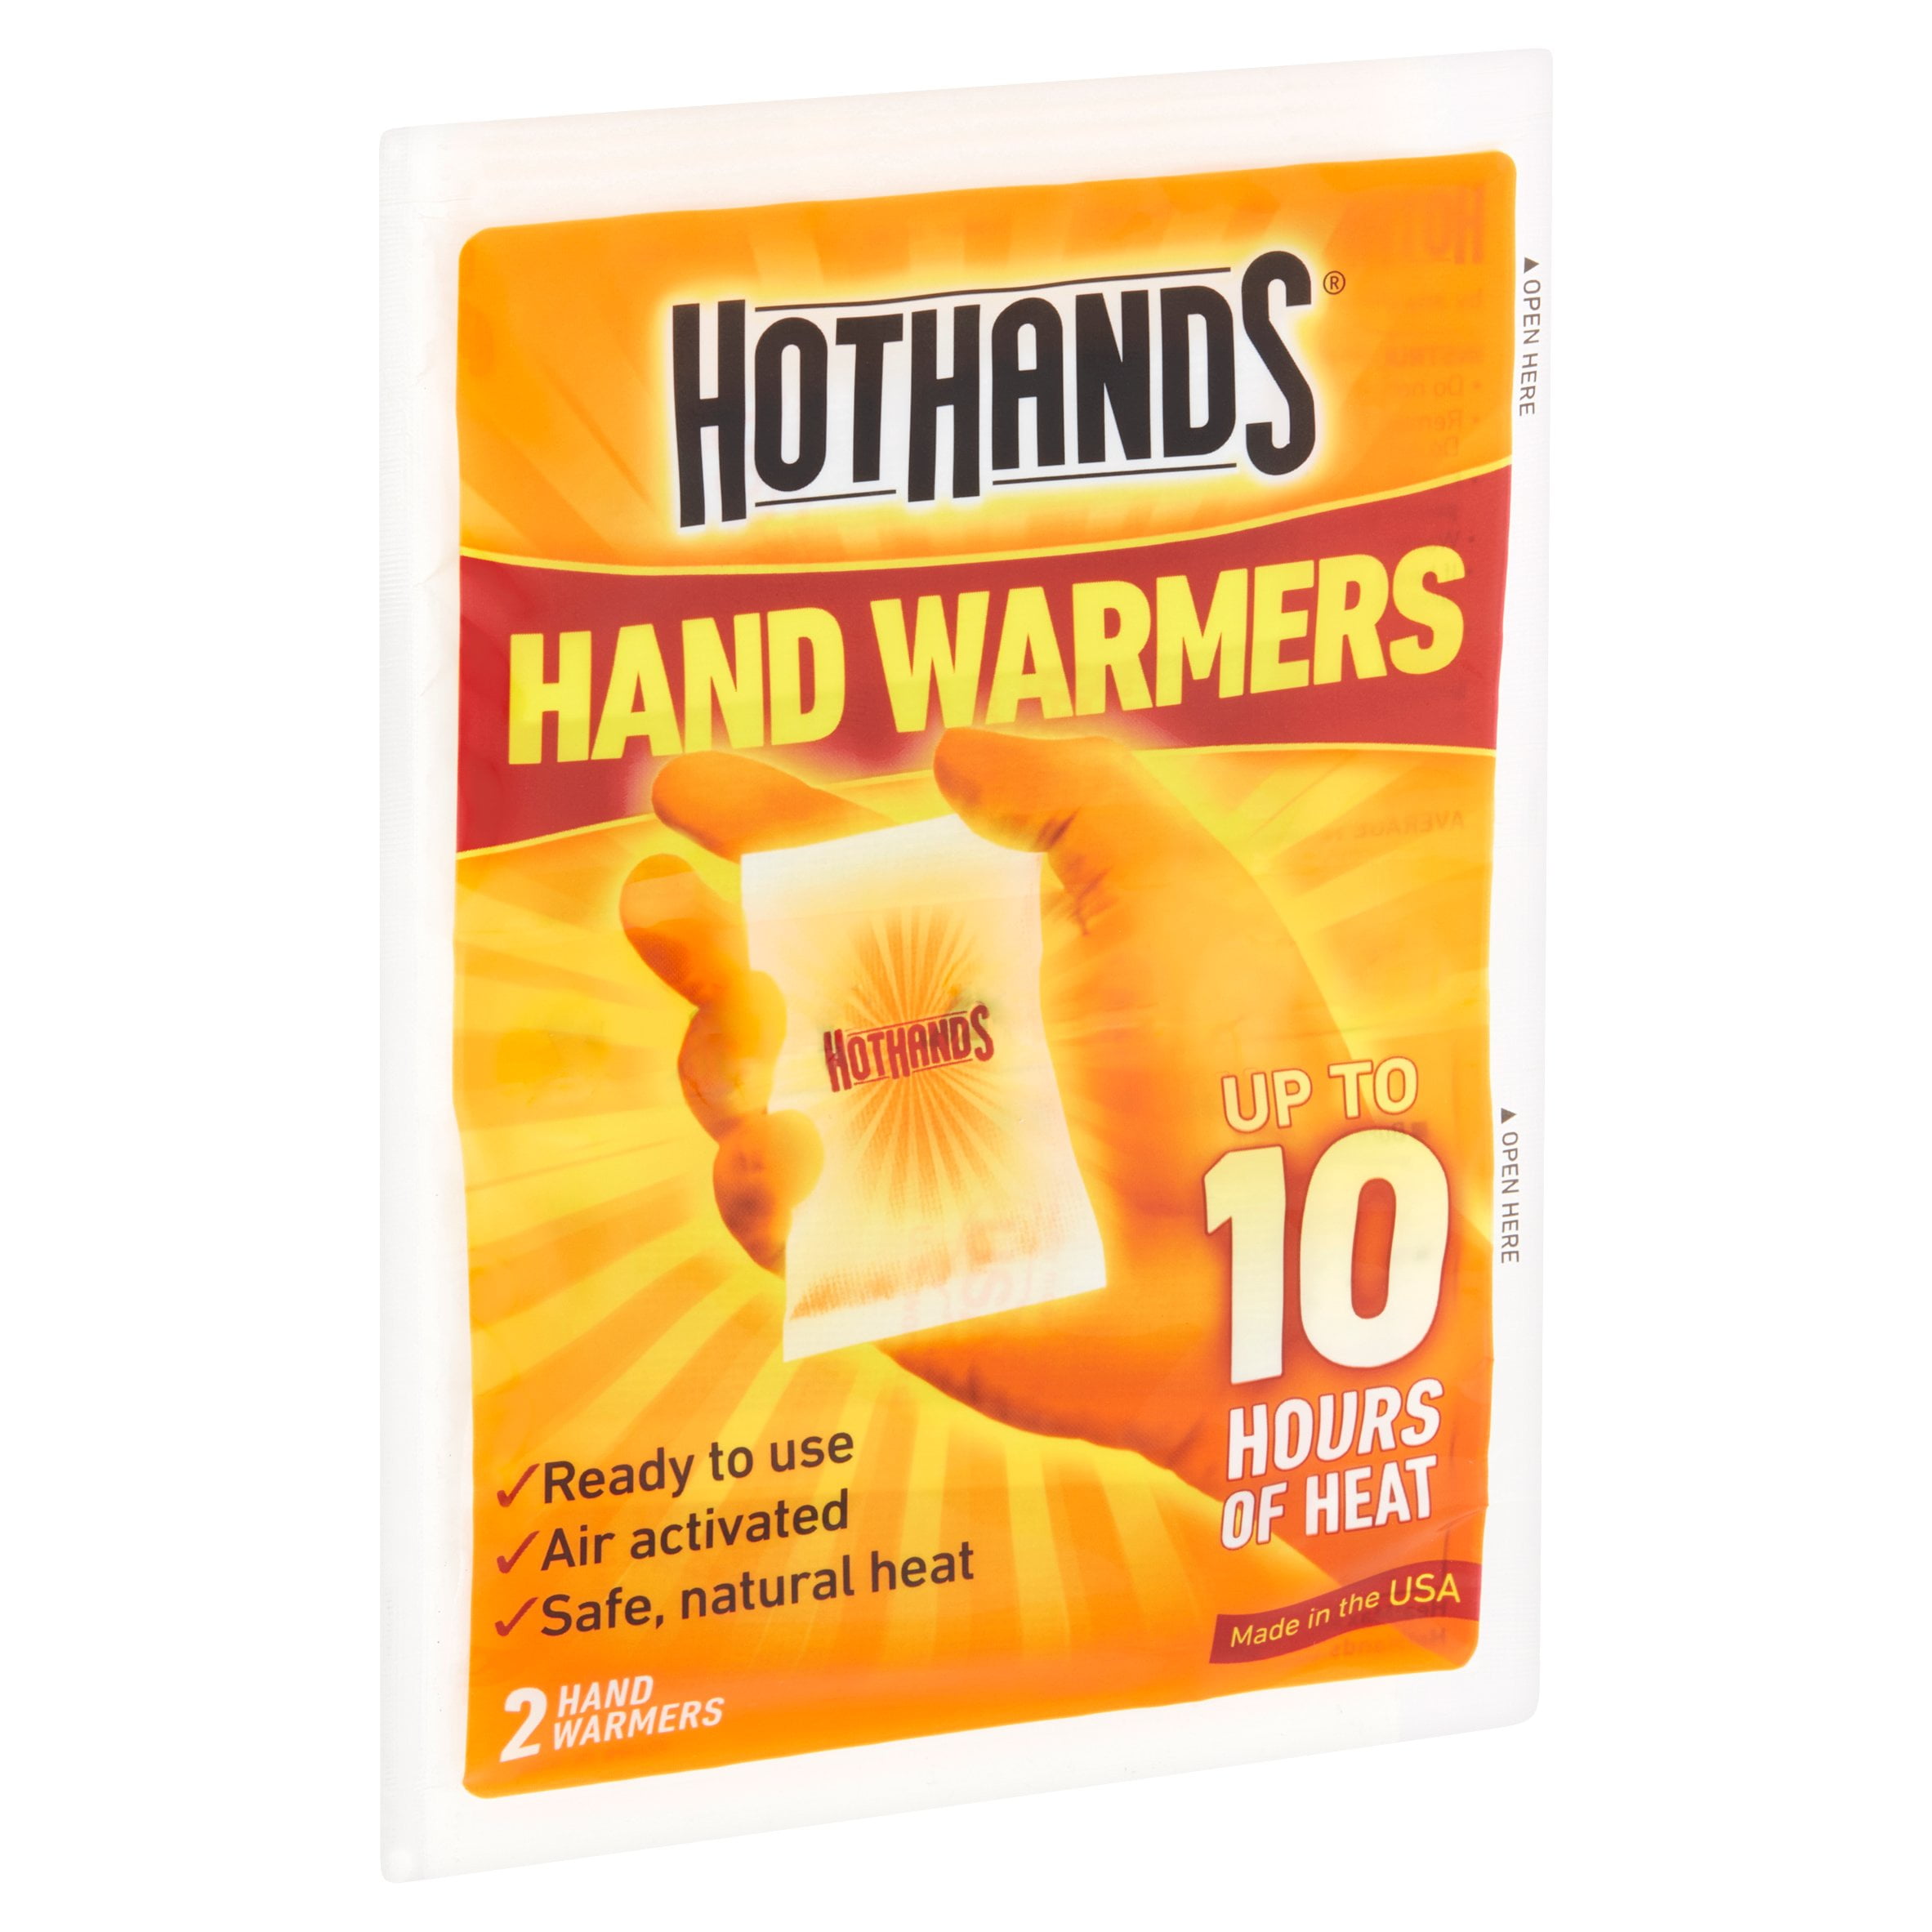 Hot Hands Super Warmer Value Pack 18 Hours Of Heat. 10 Super Hand Warmers 